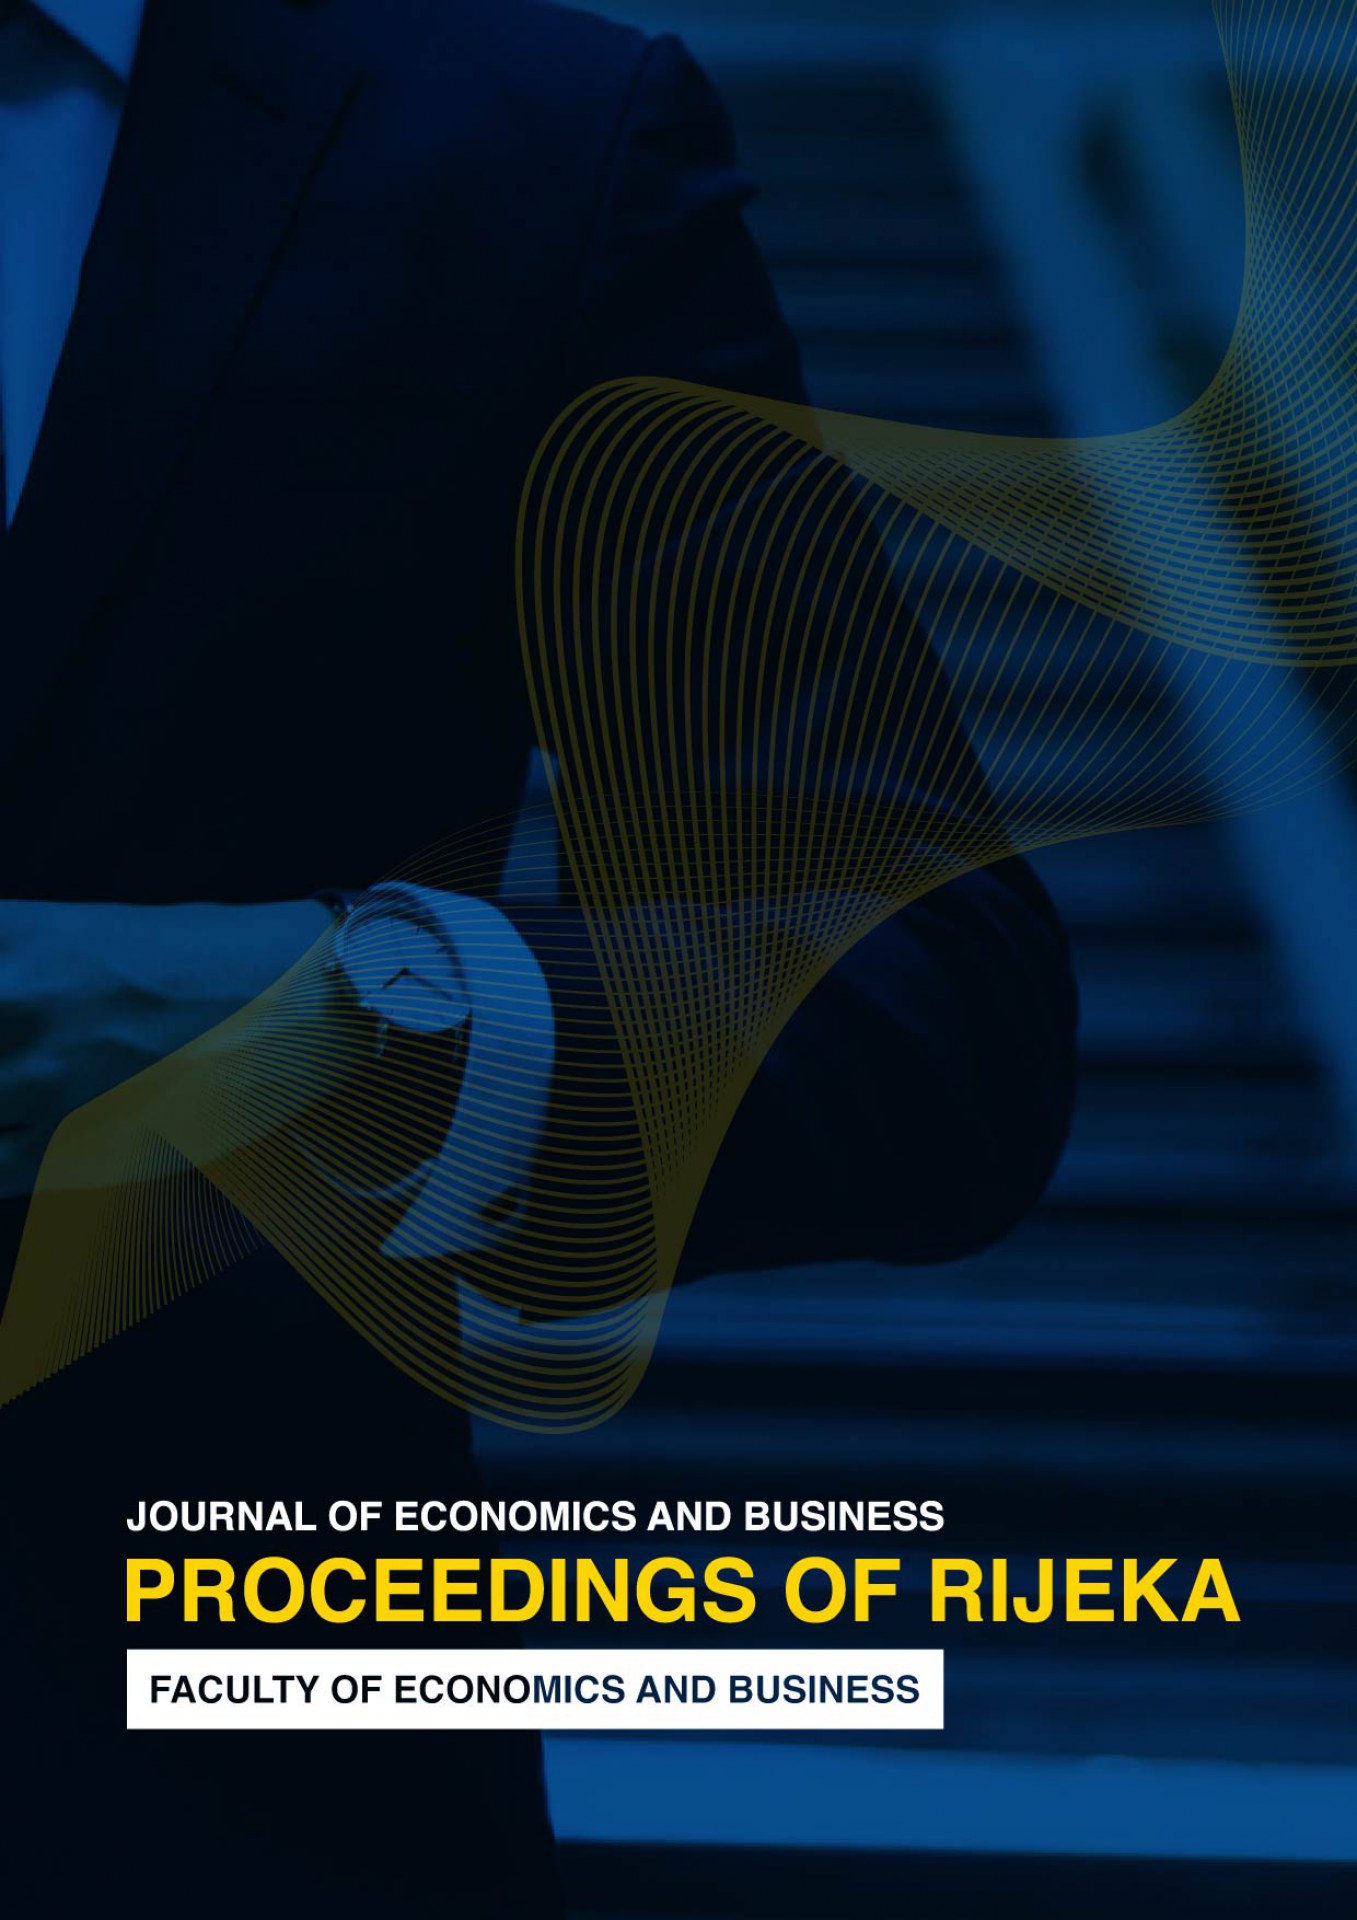 Zbornik radova Ekonomskog fakulteta u Rijeci/
Proceedings of Rijeka Faculty of Economics